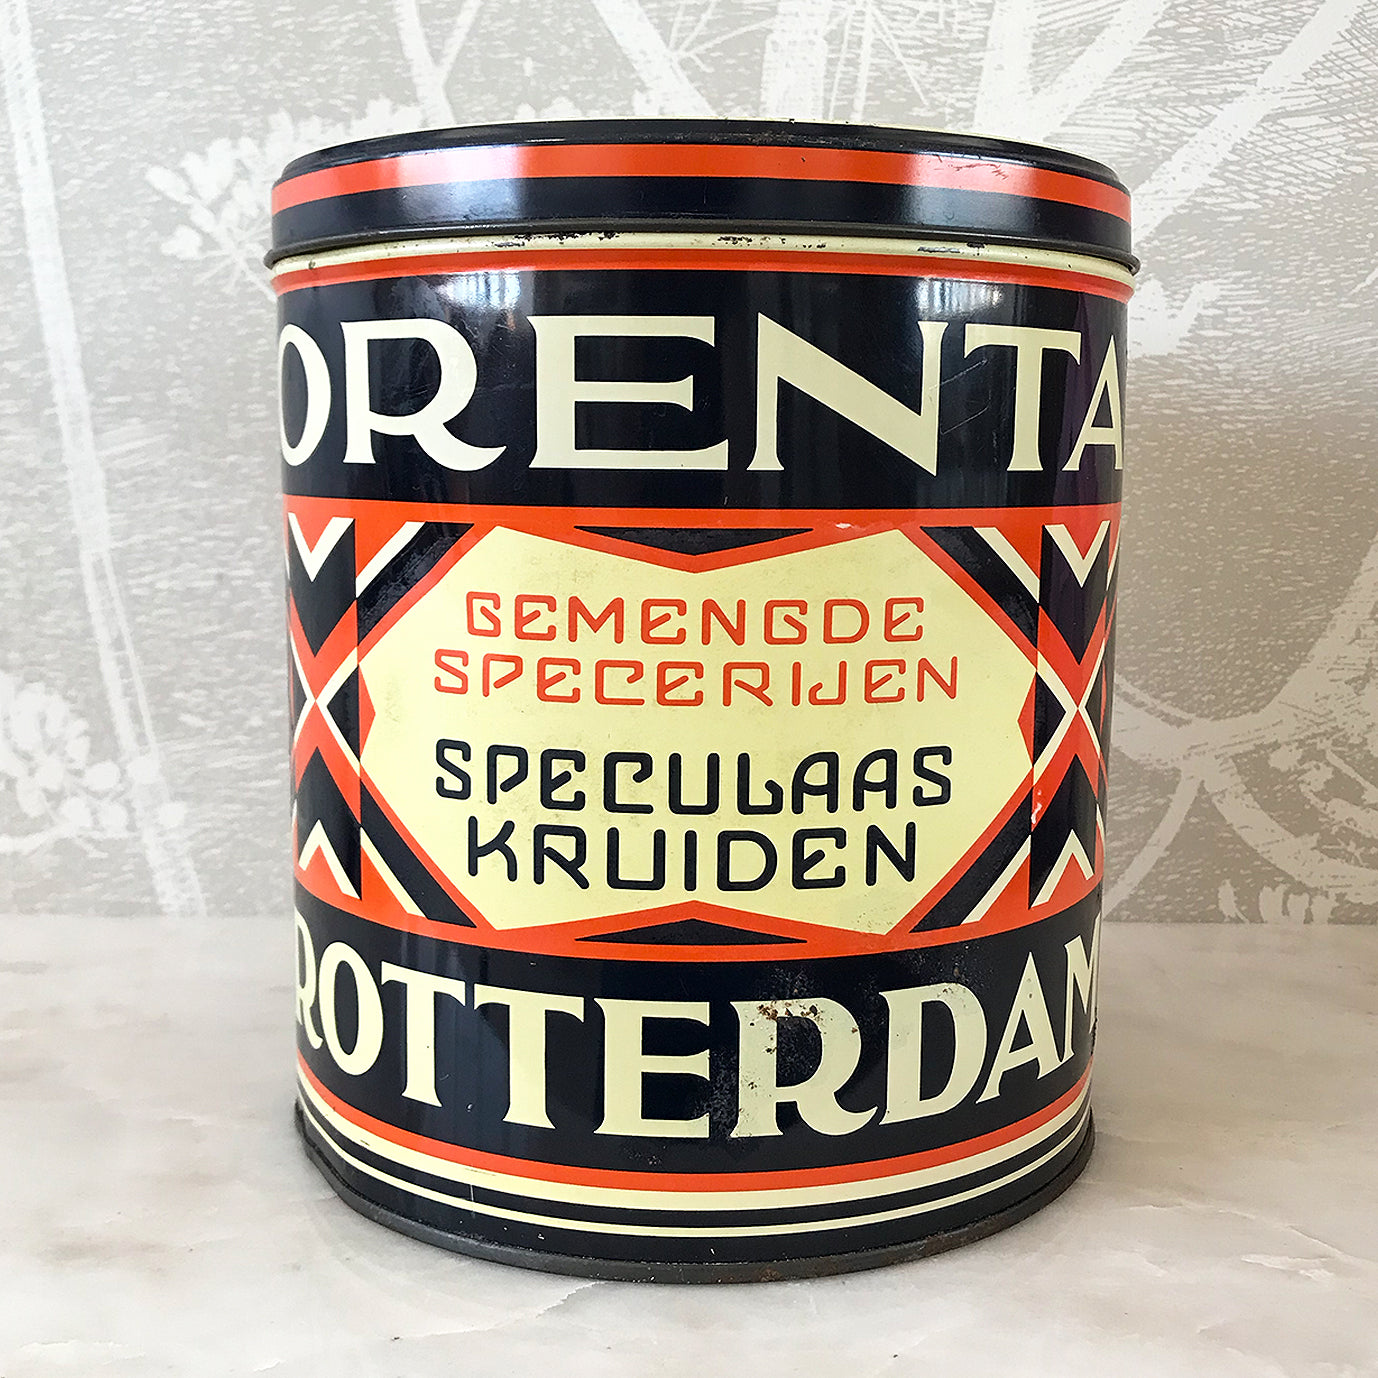 Large Vintage Dutch Spice Tin